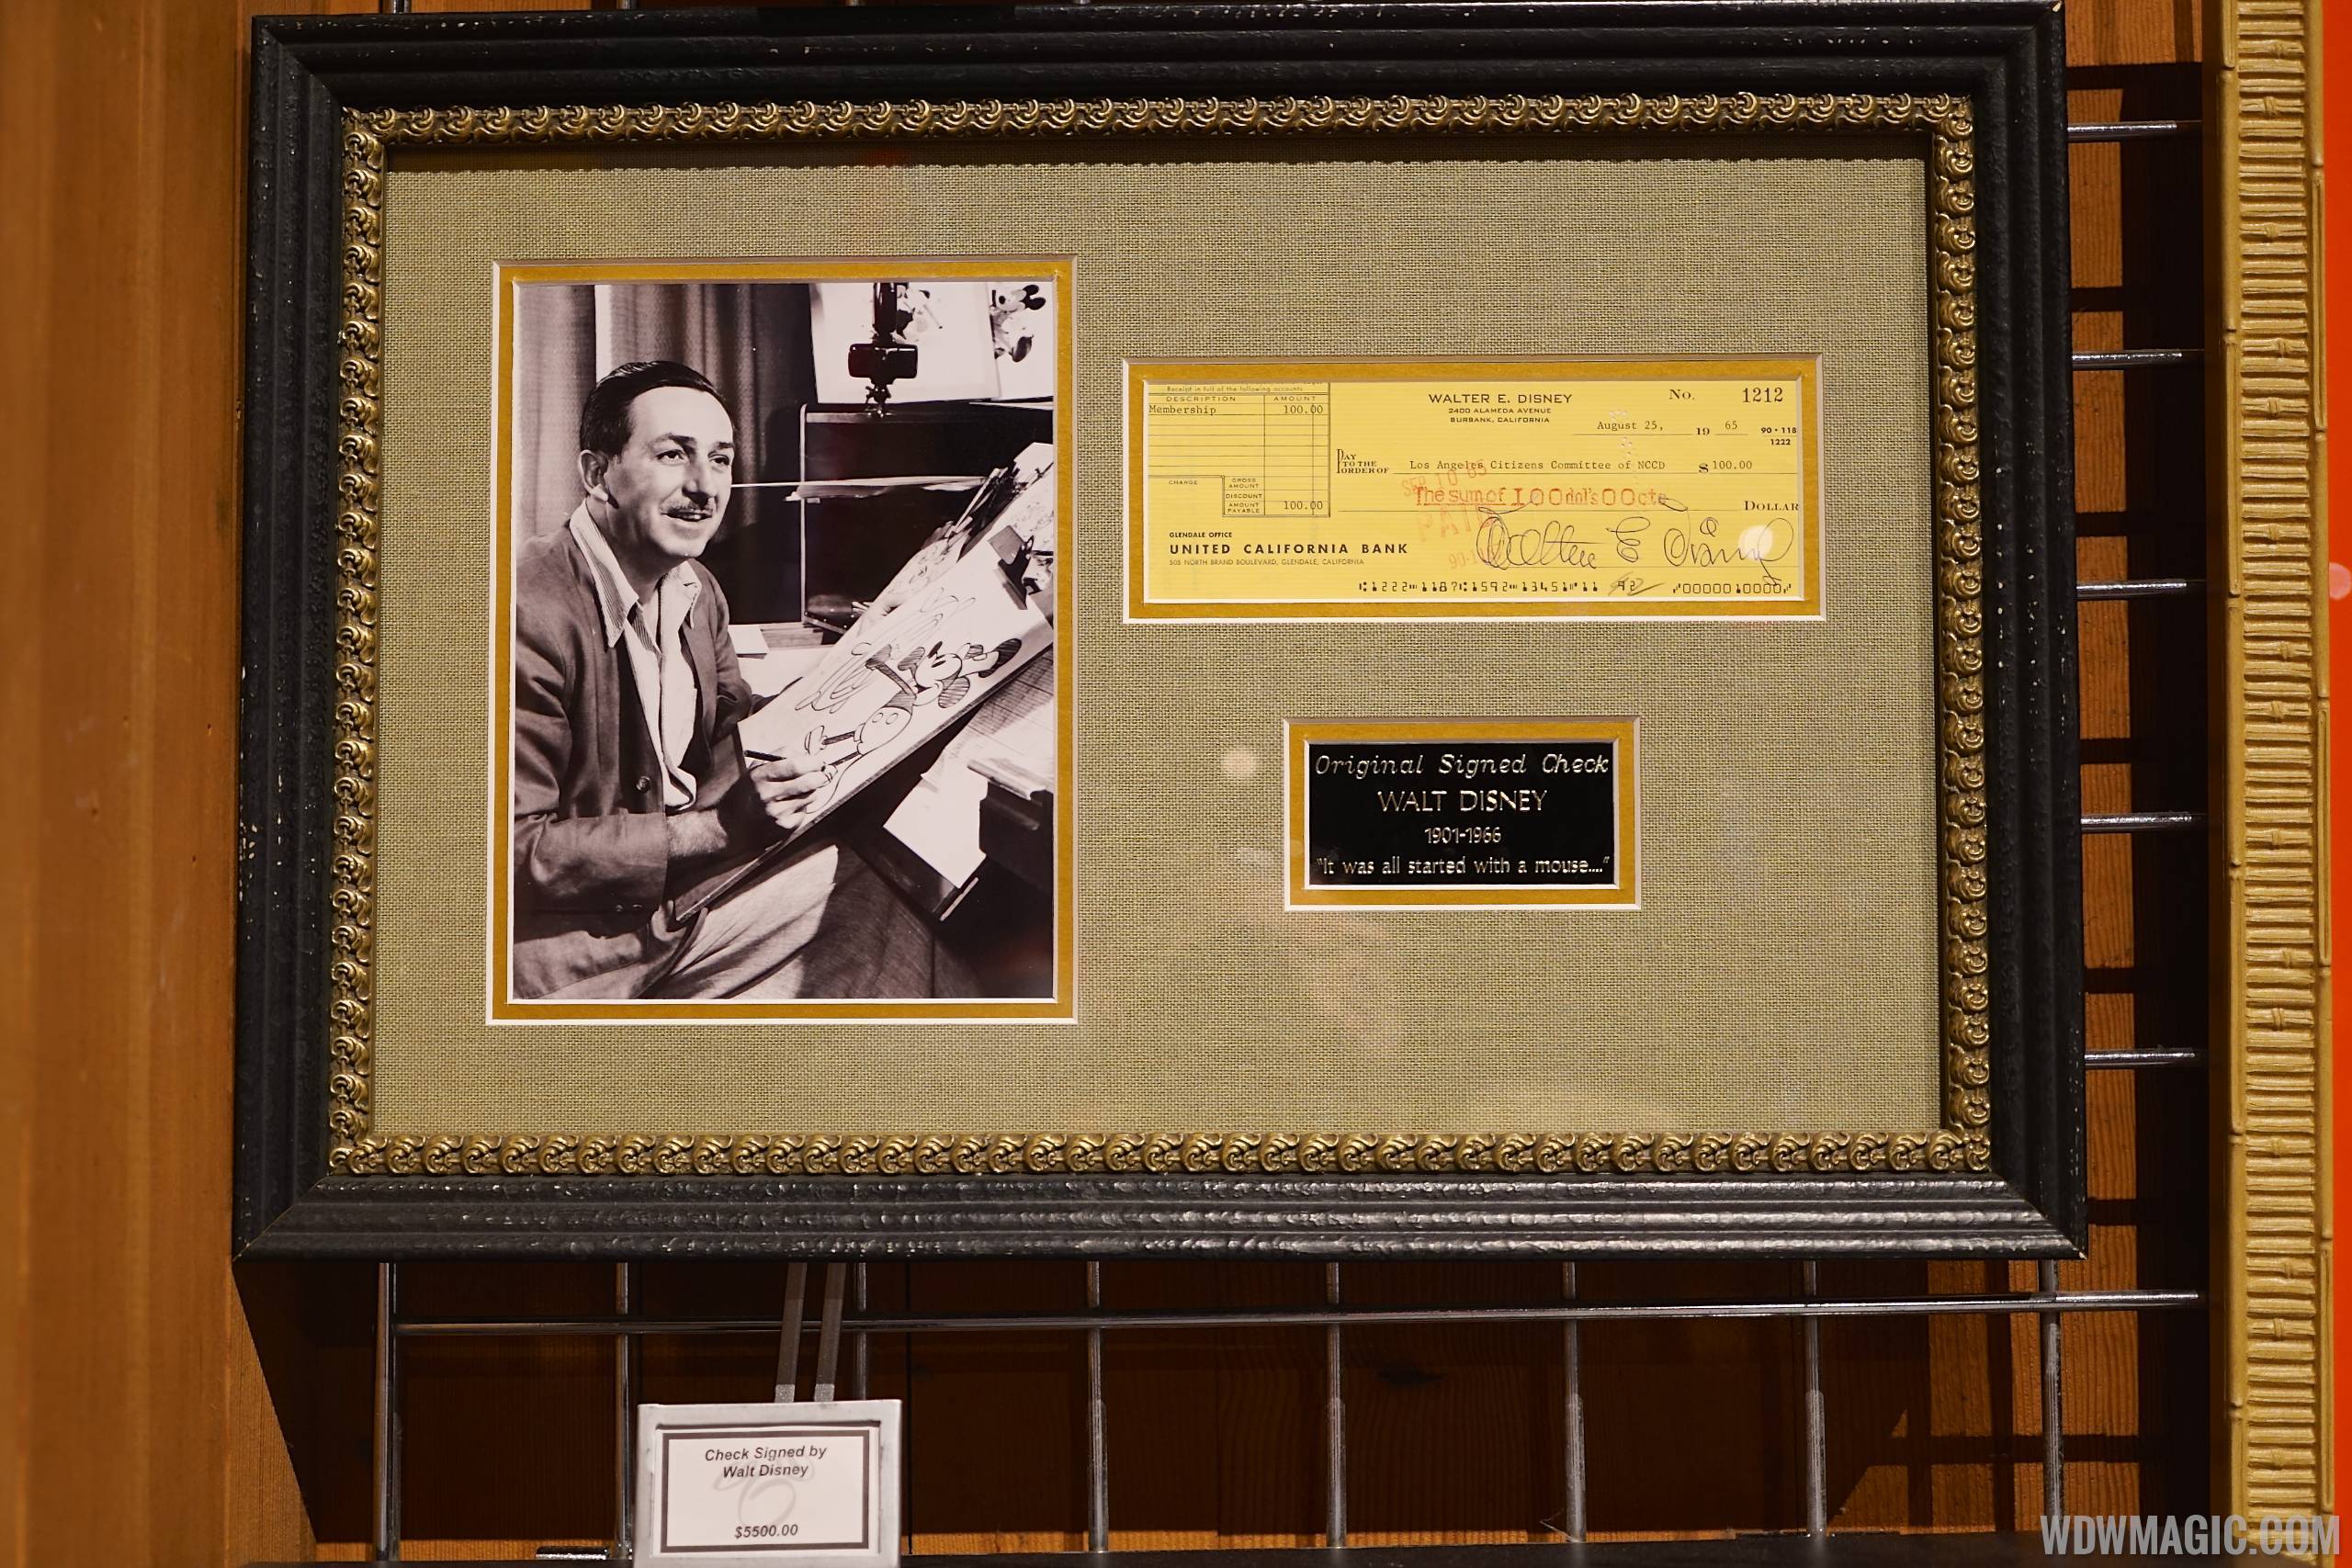 American Film Institute exhibit - The Showcase Shop  Walt Disney signed piece